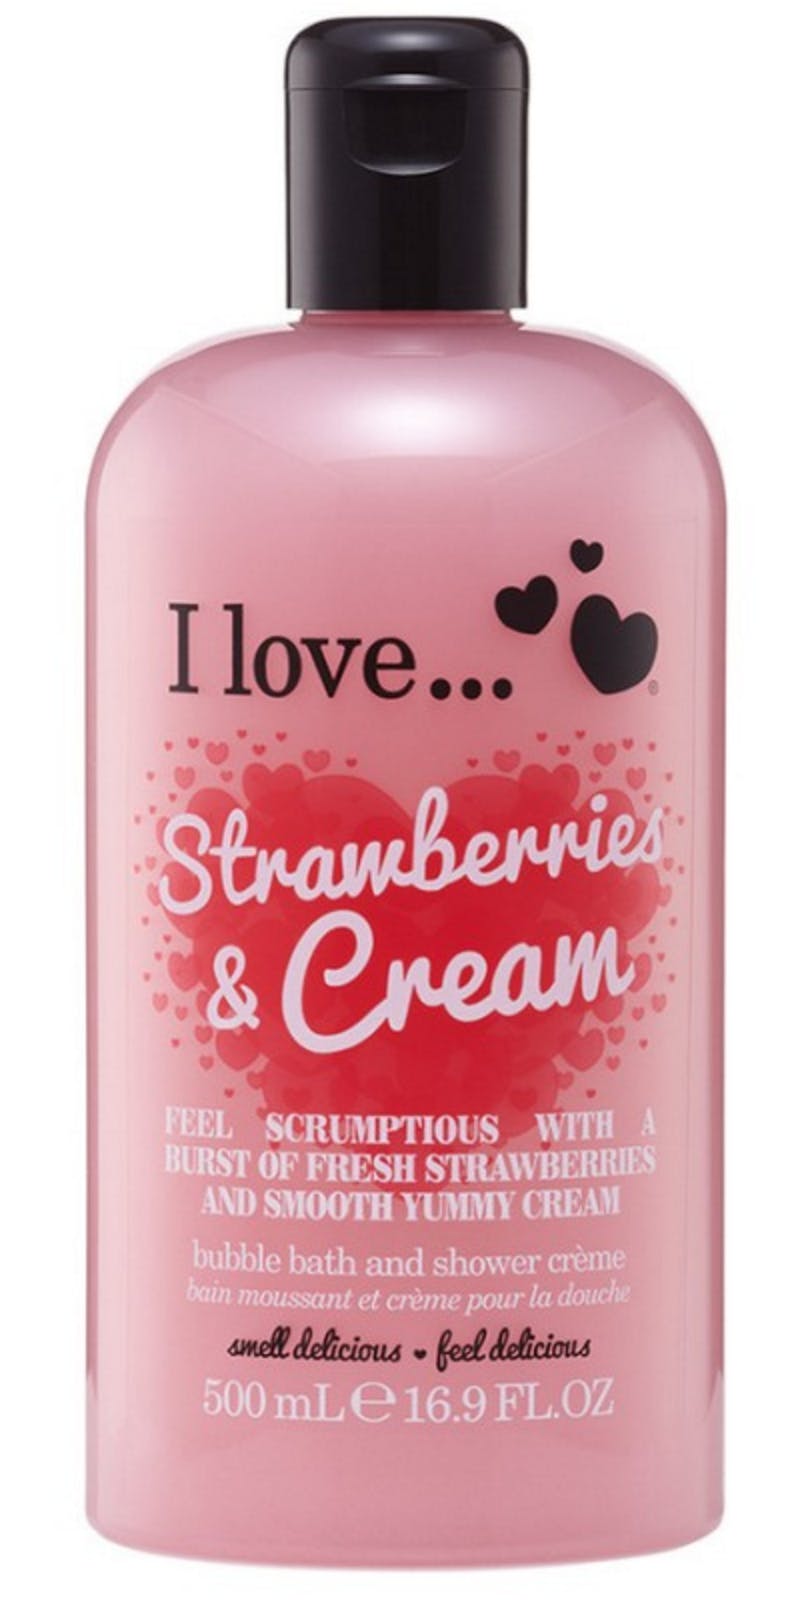 I Love Cosmetics Bath & Shower Creme Strawberries & Cream 500 ml